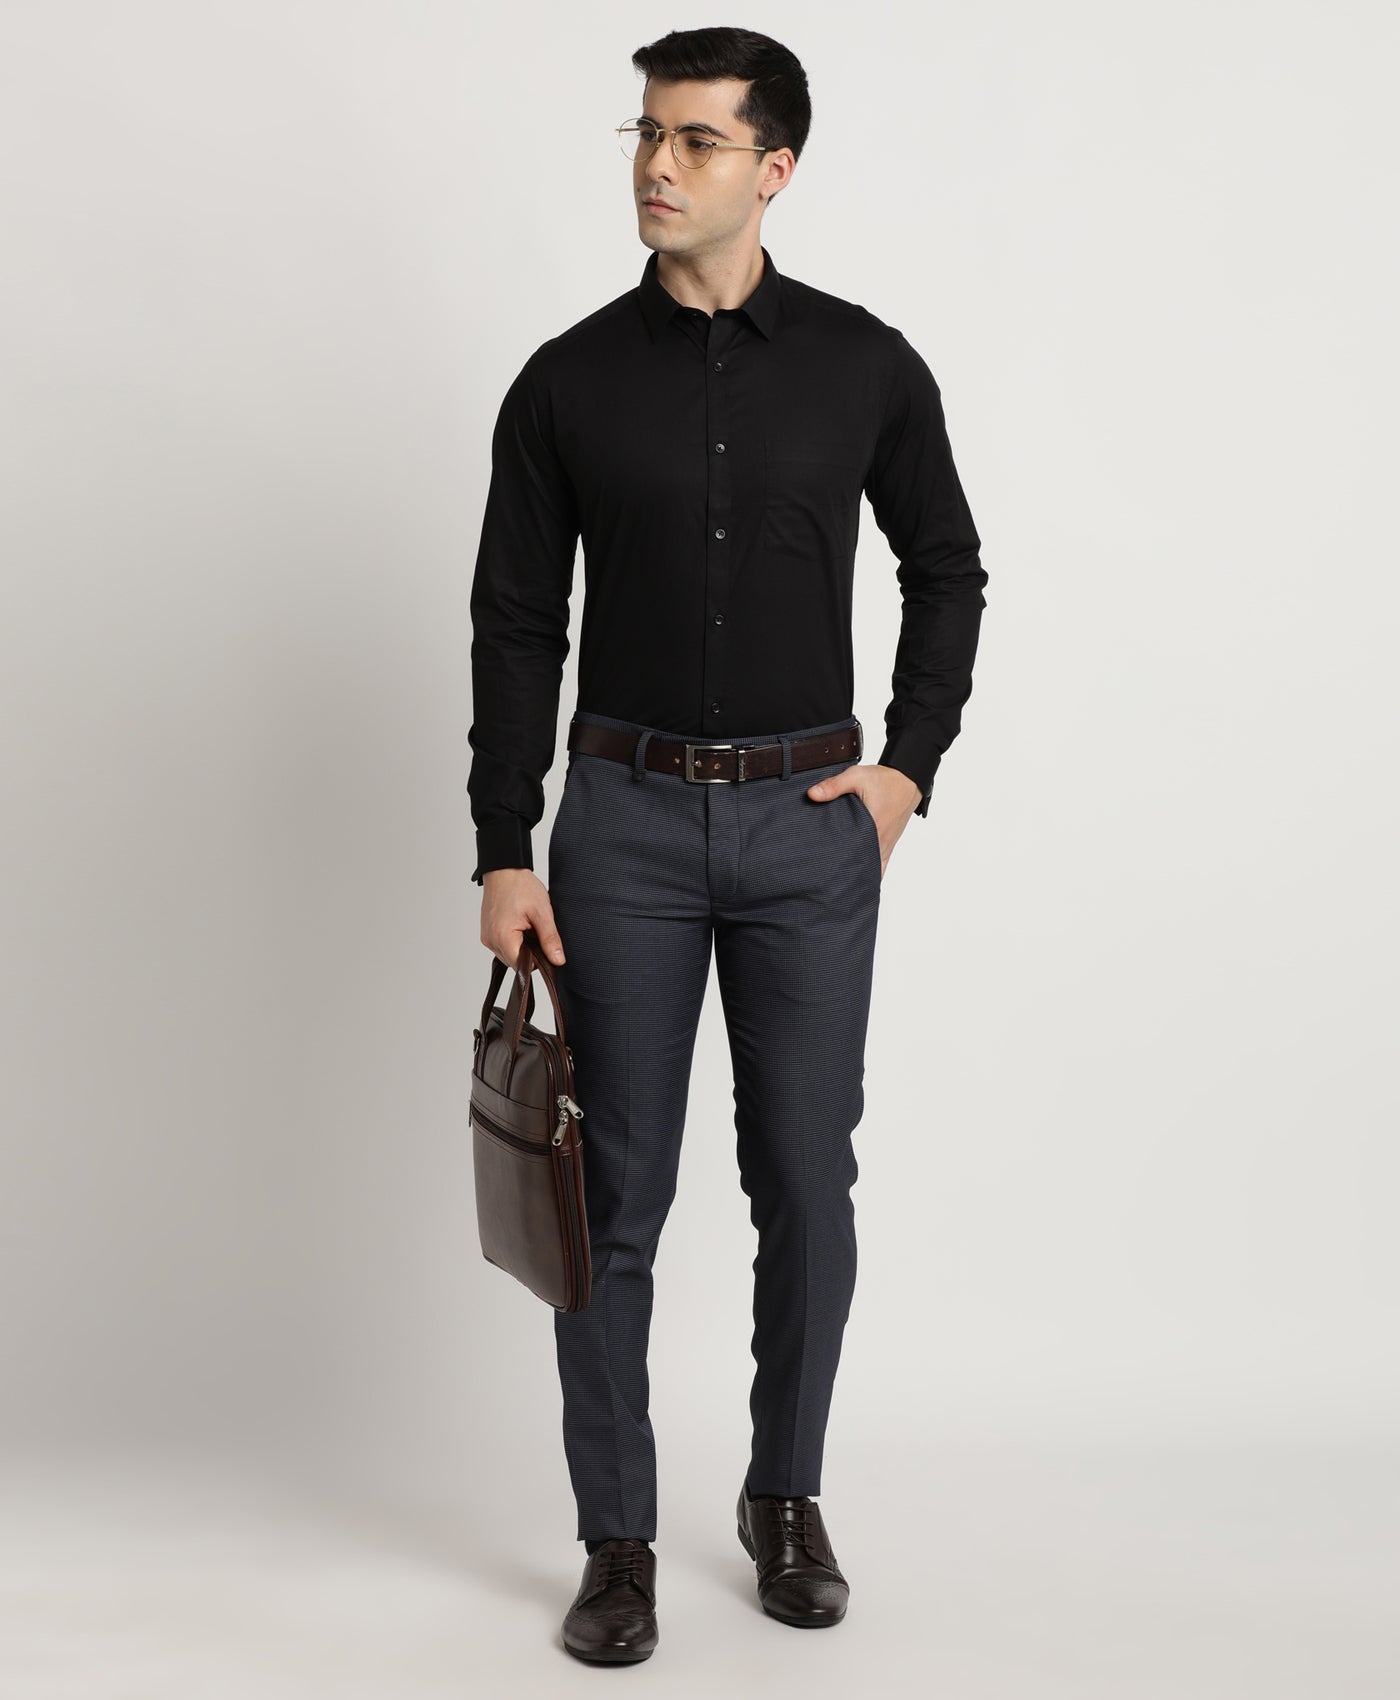 100% Cotton Black Plain Regular Fit Double Cuff Formal Shirt